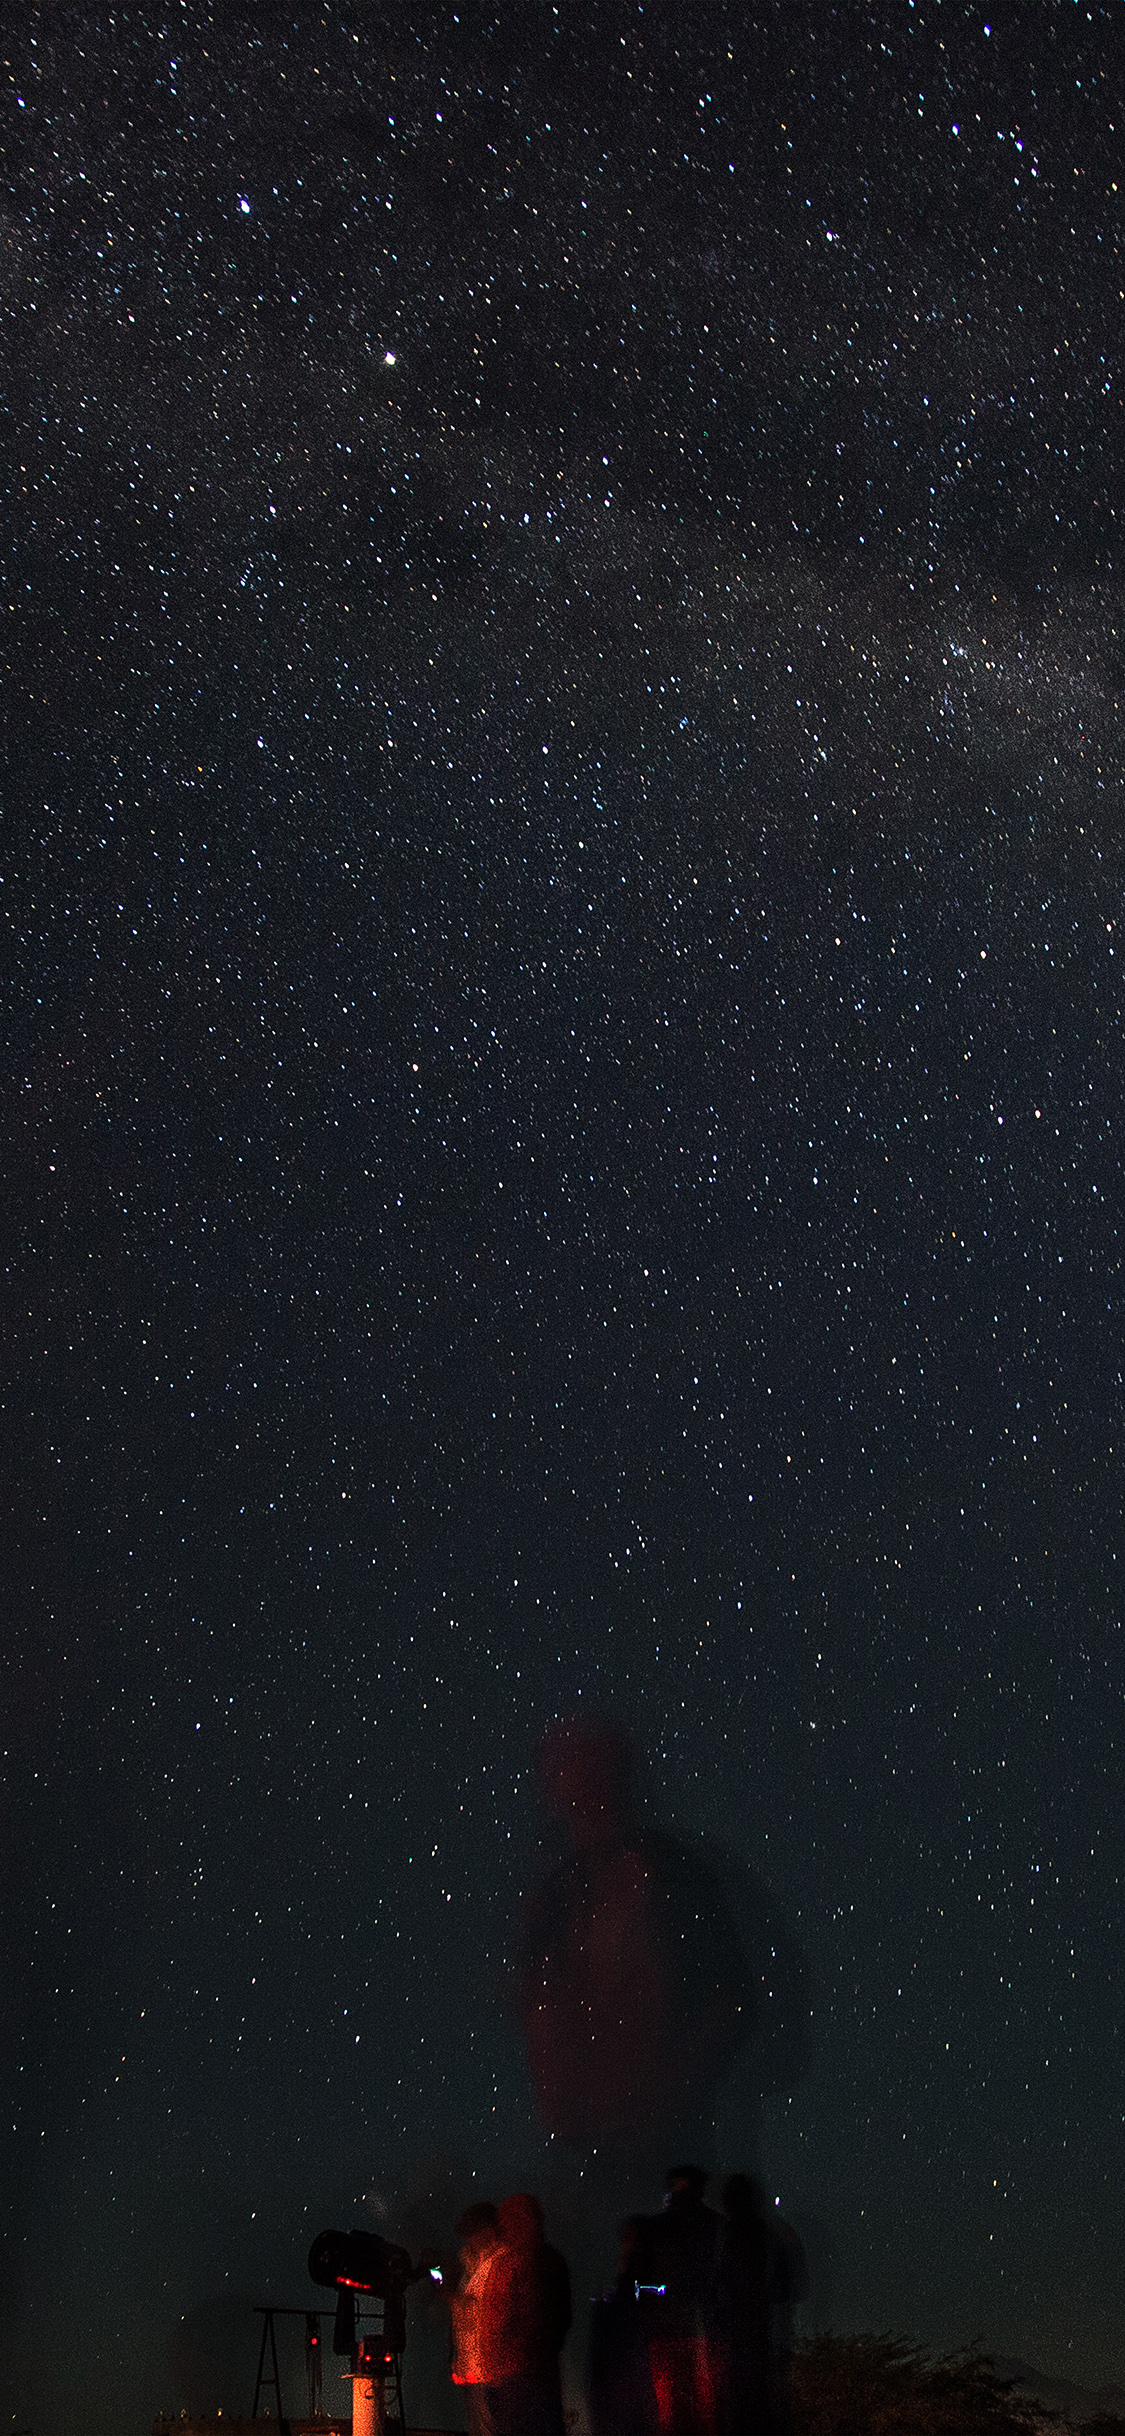 1125x2436 | iPhone11 wallpaper | nj27-starry-night-sky-space-nightdark